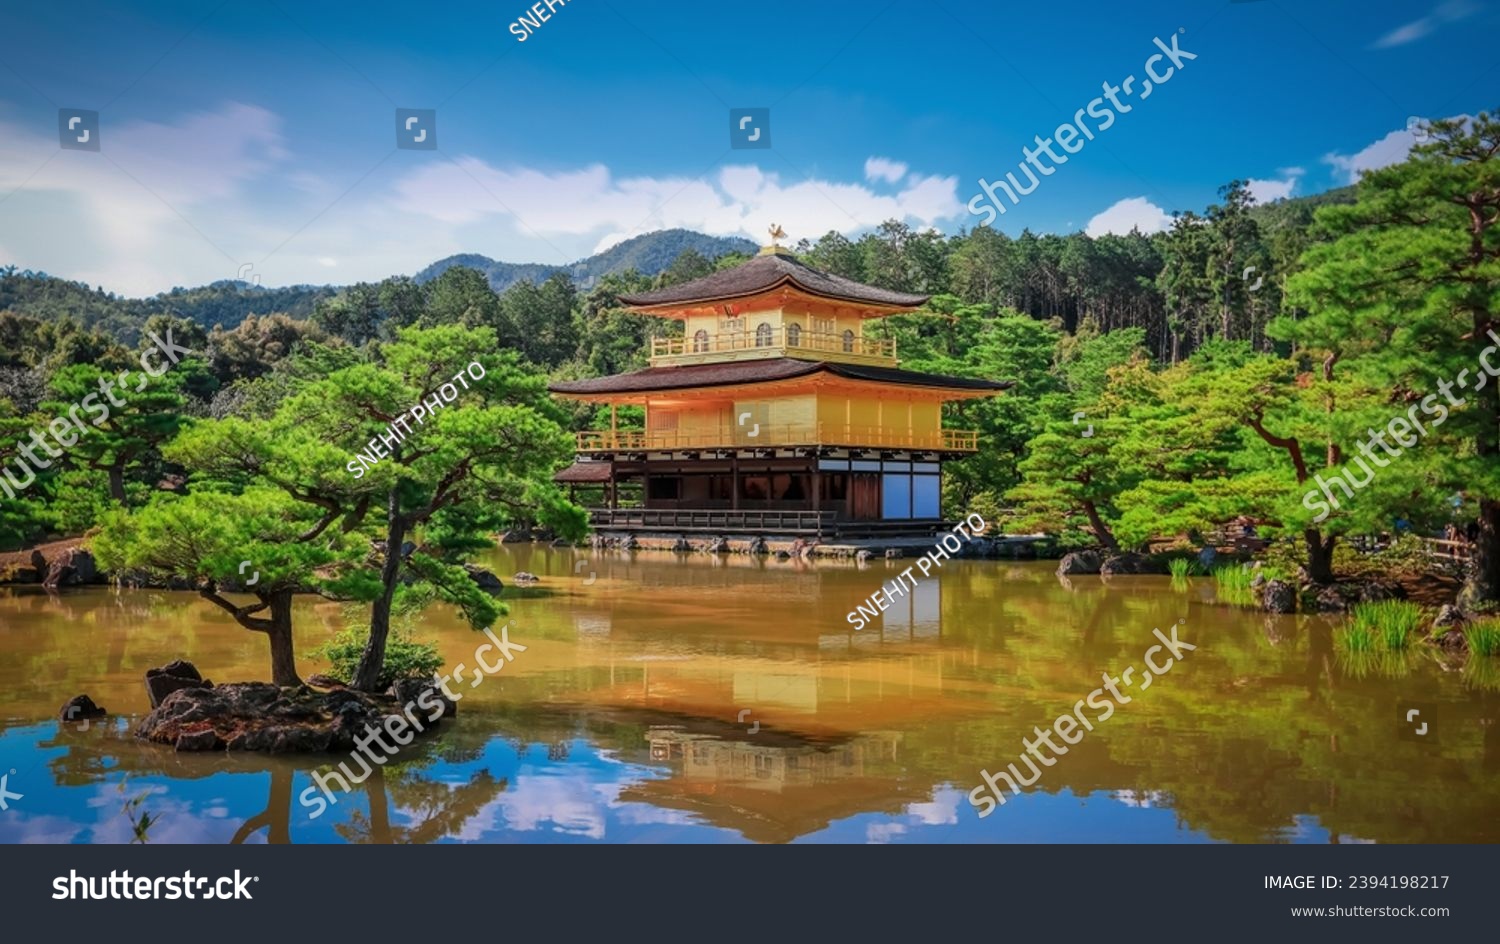 Historic Kinkaku-ji Temple of the Golden Pavilion in Kyoto city,Japan #2394198217